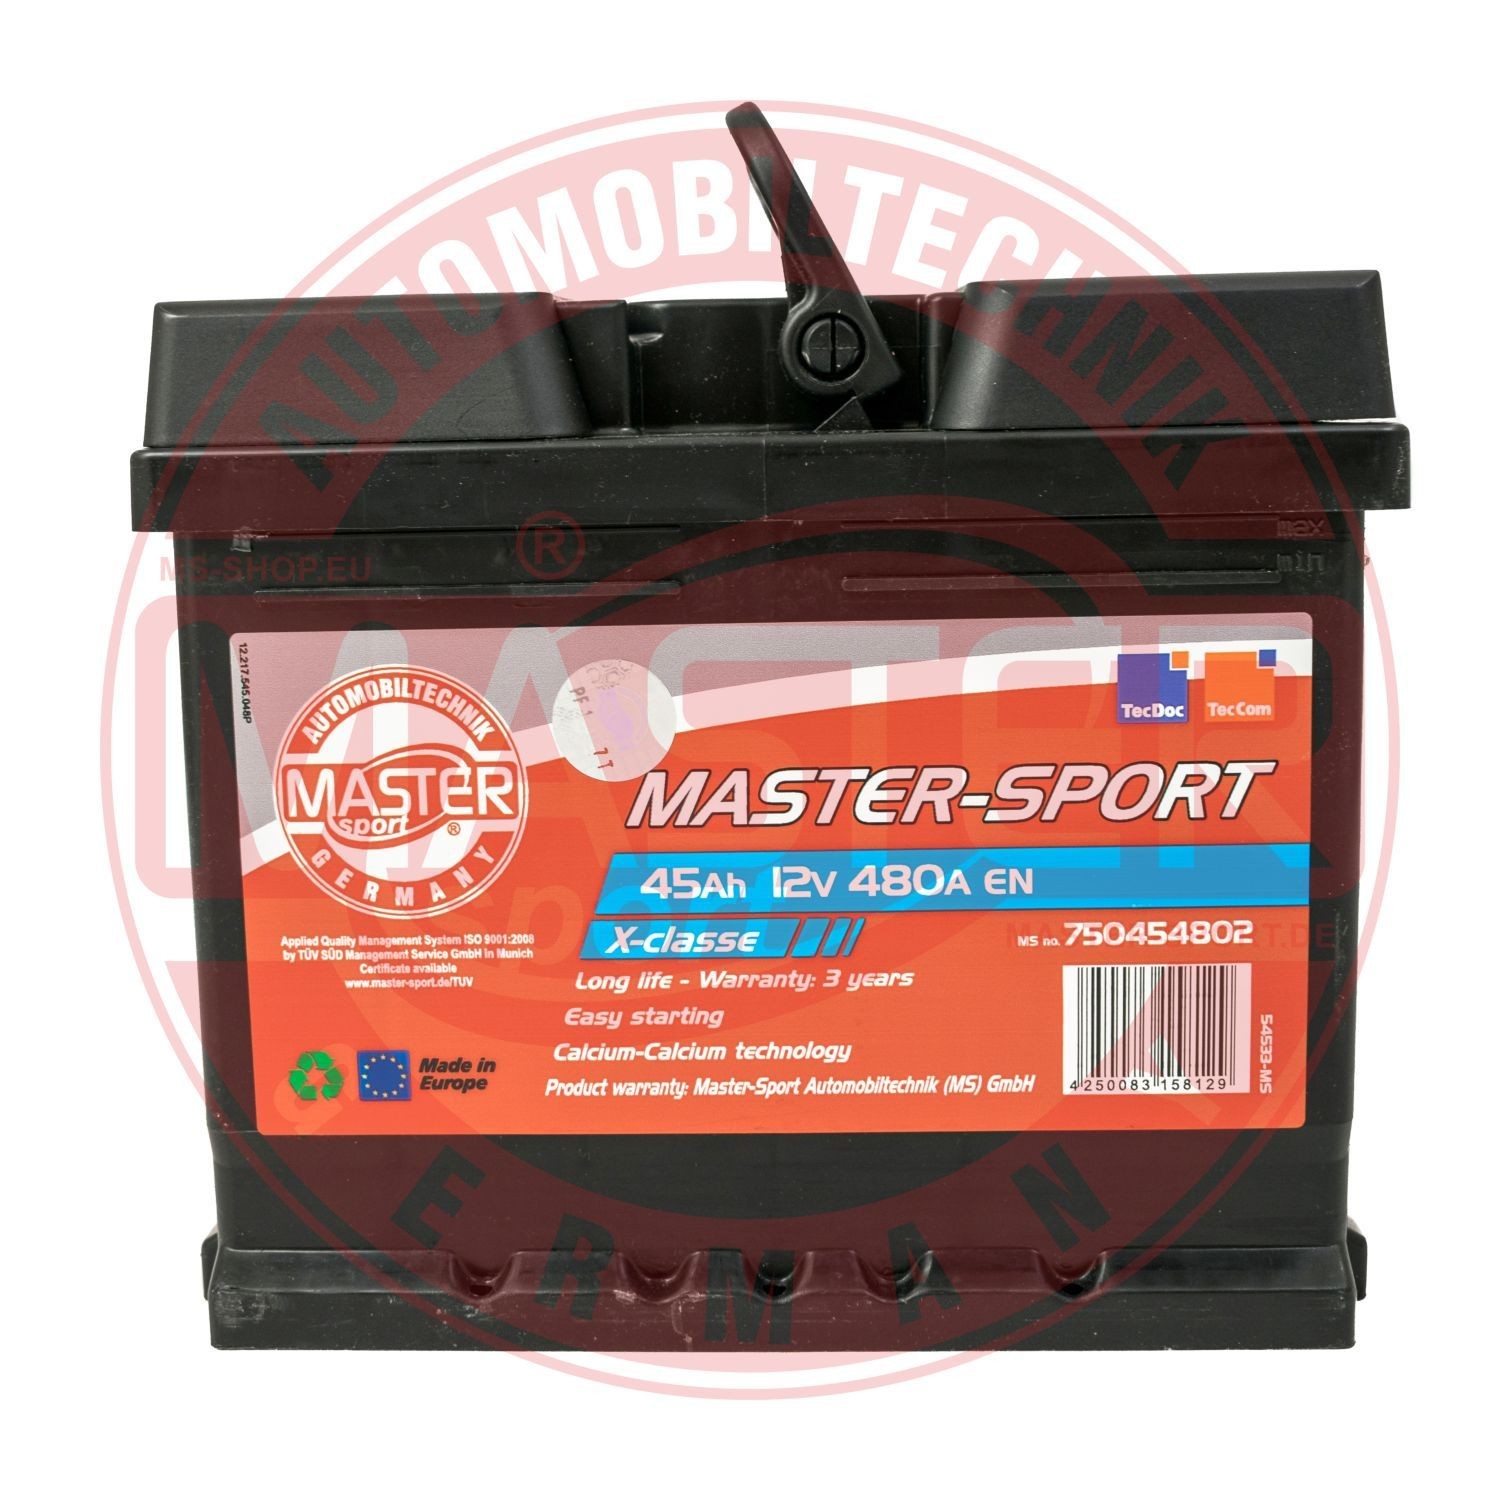 MASTER-SPORT 780454802 Battery 24410AY60B